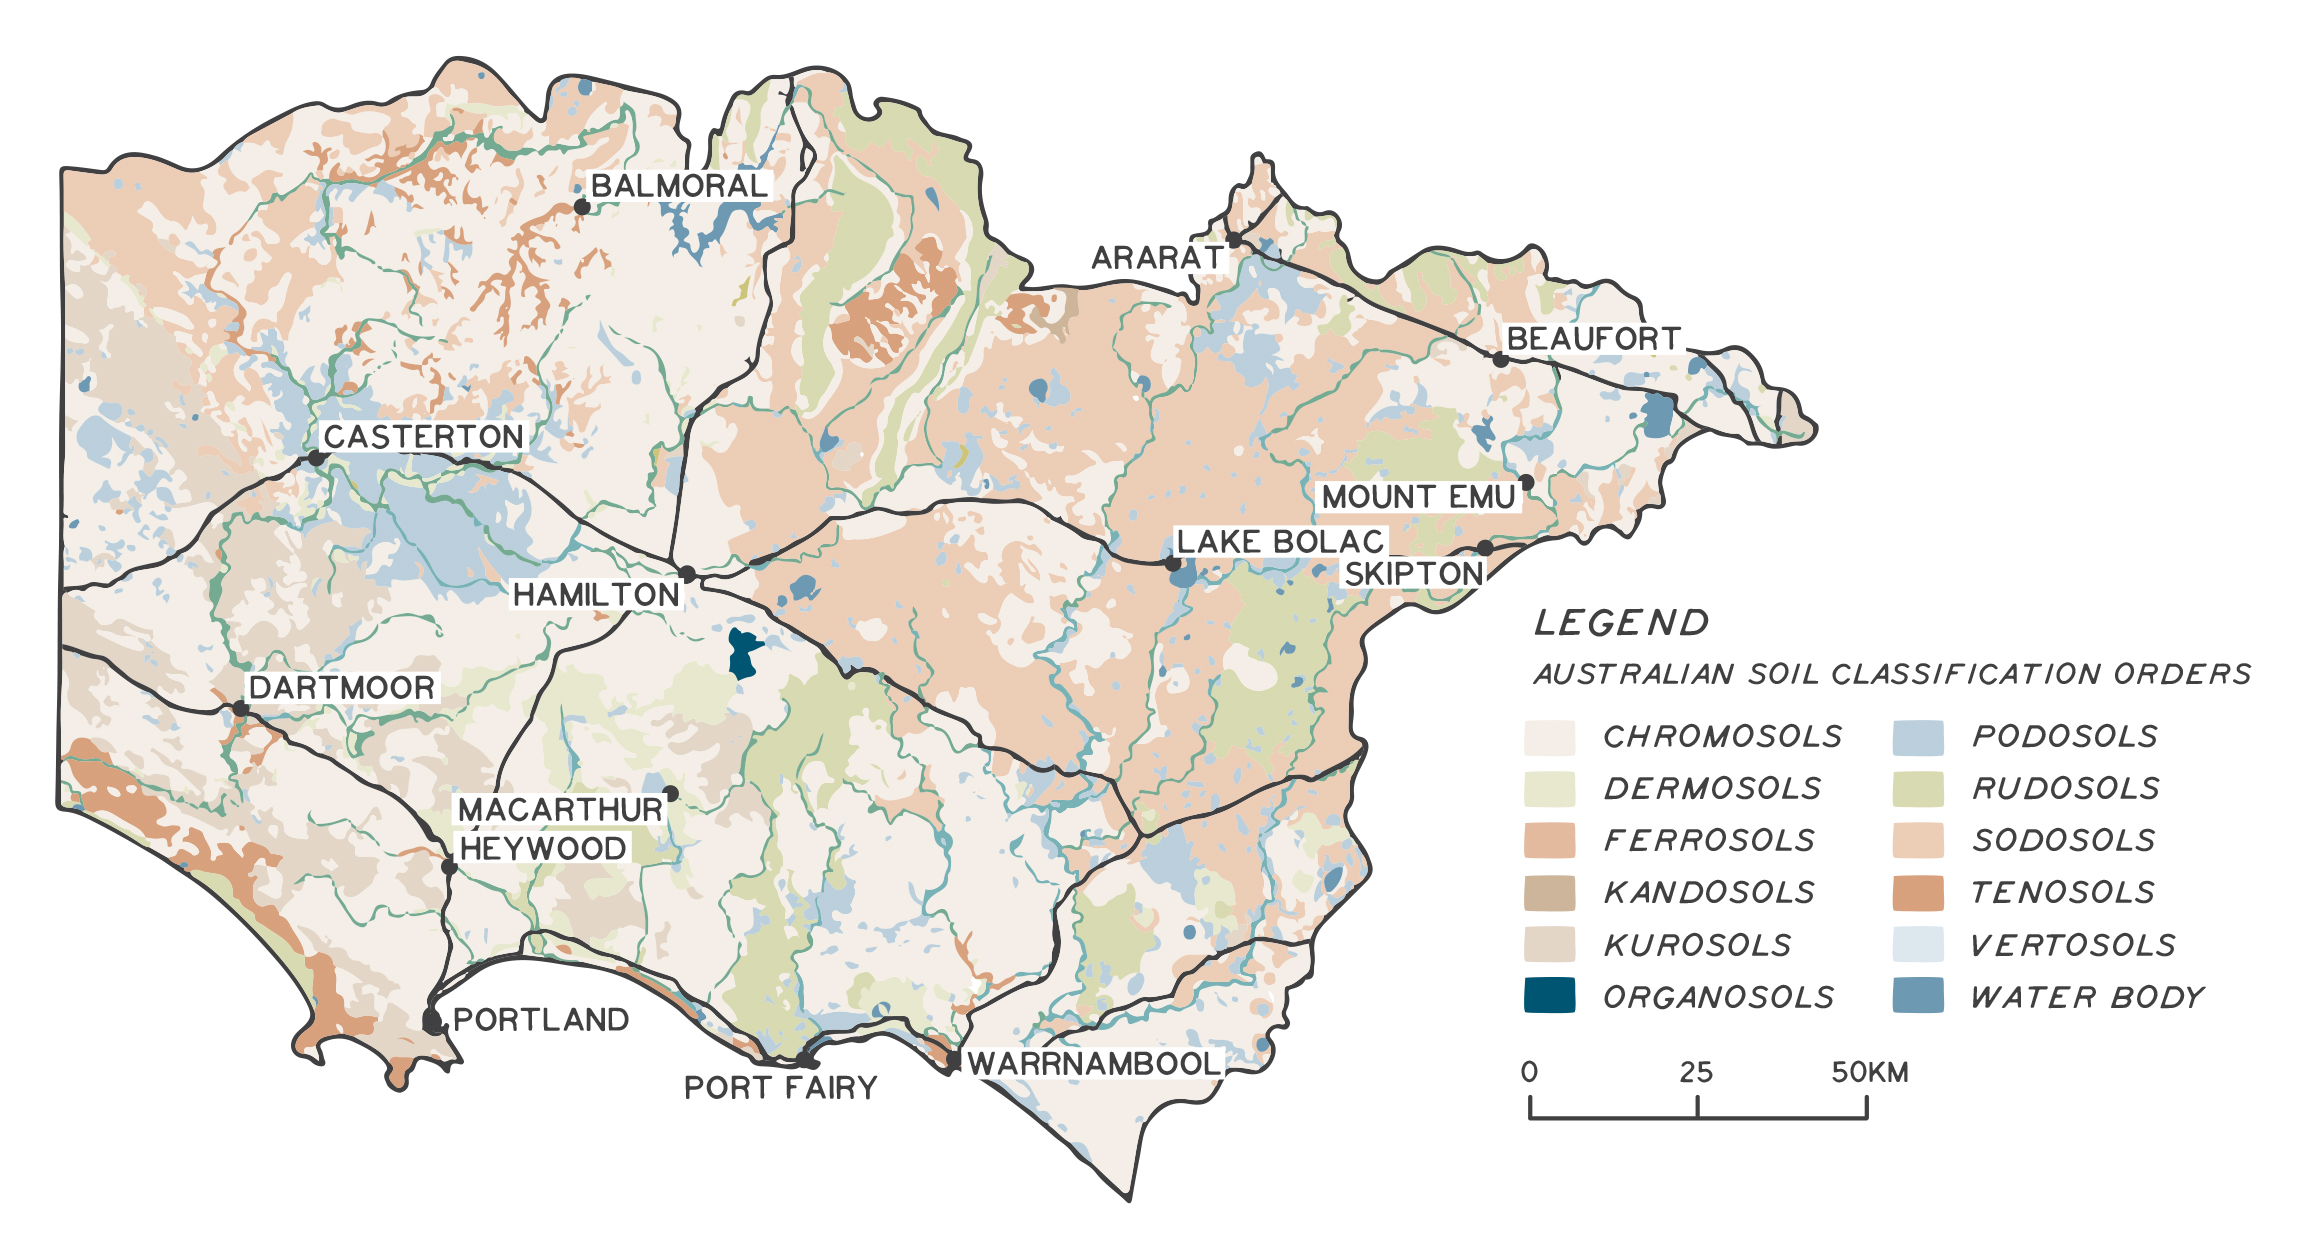 Distribution of Australian Soil Classification Orders in the Glenelg Hopkins region